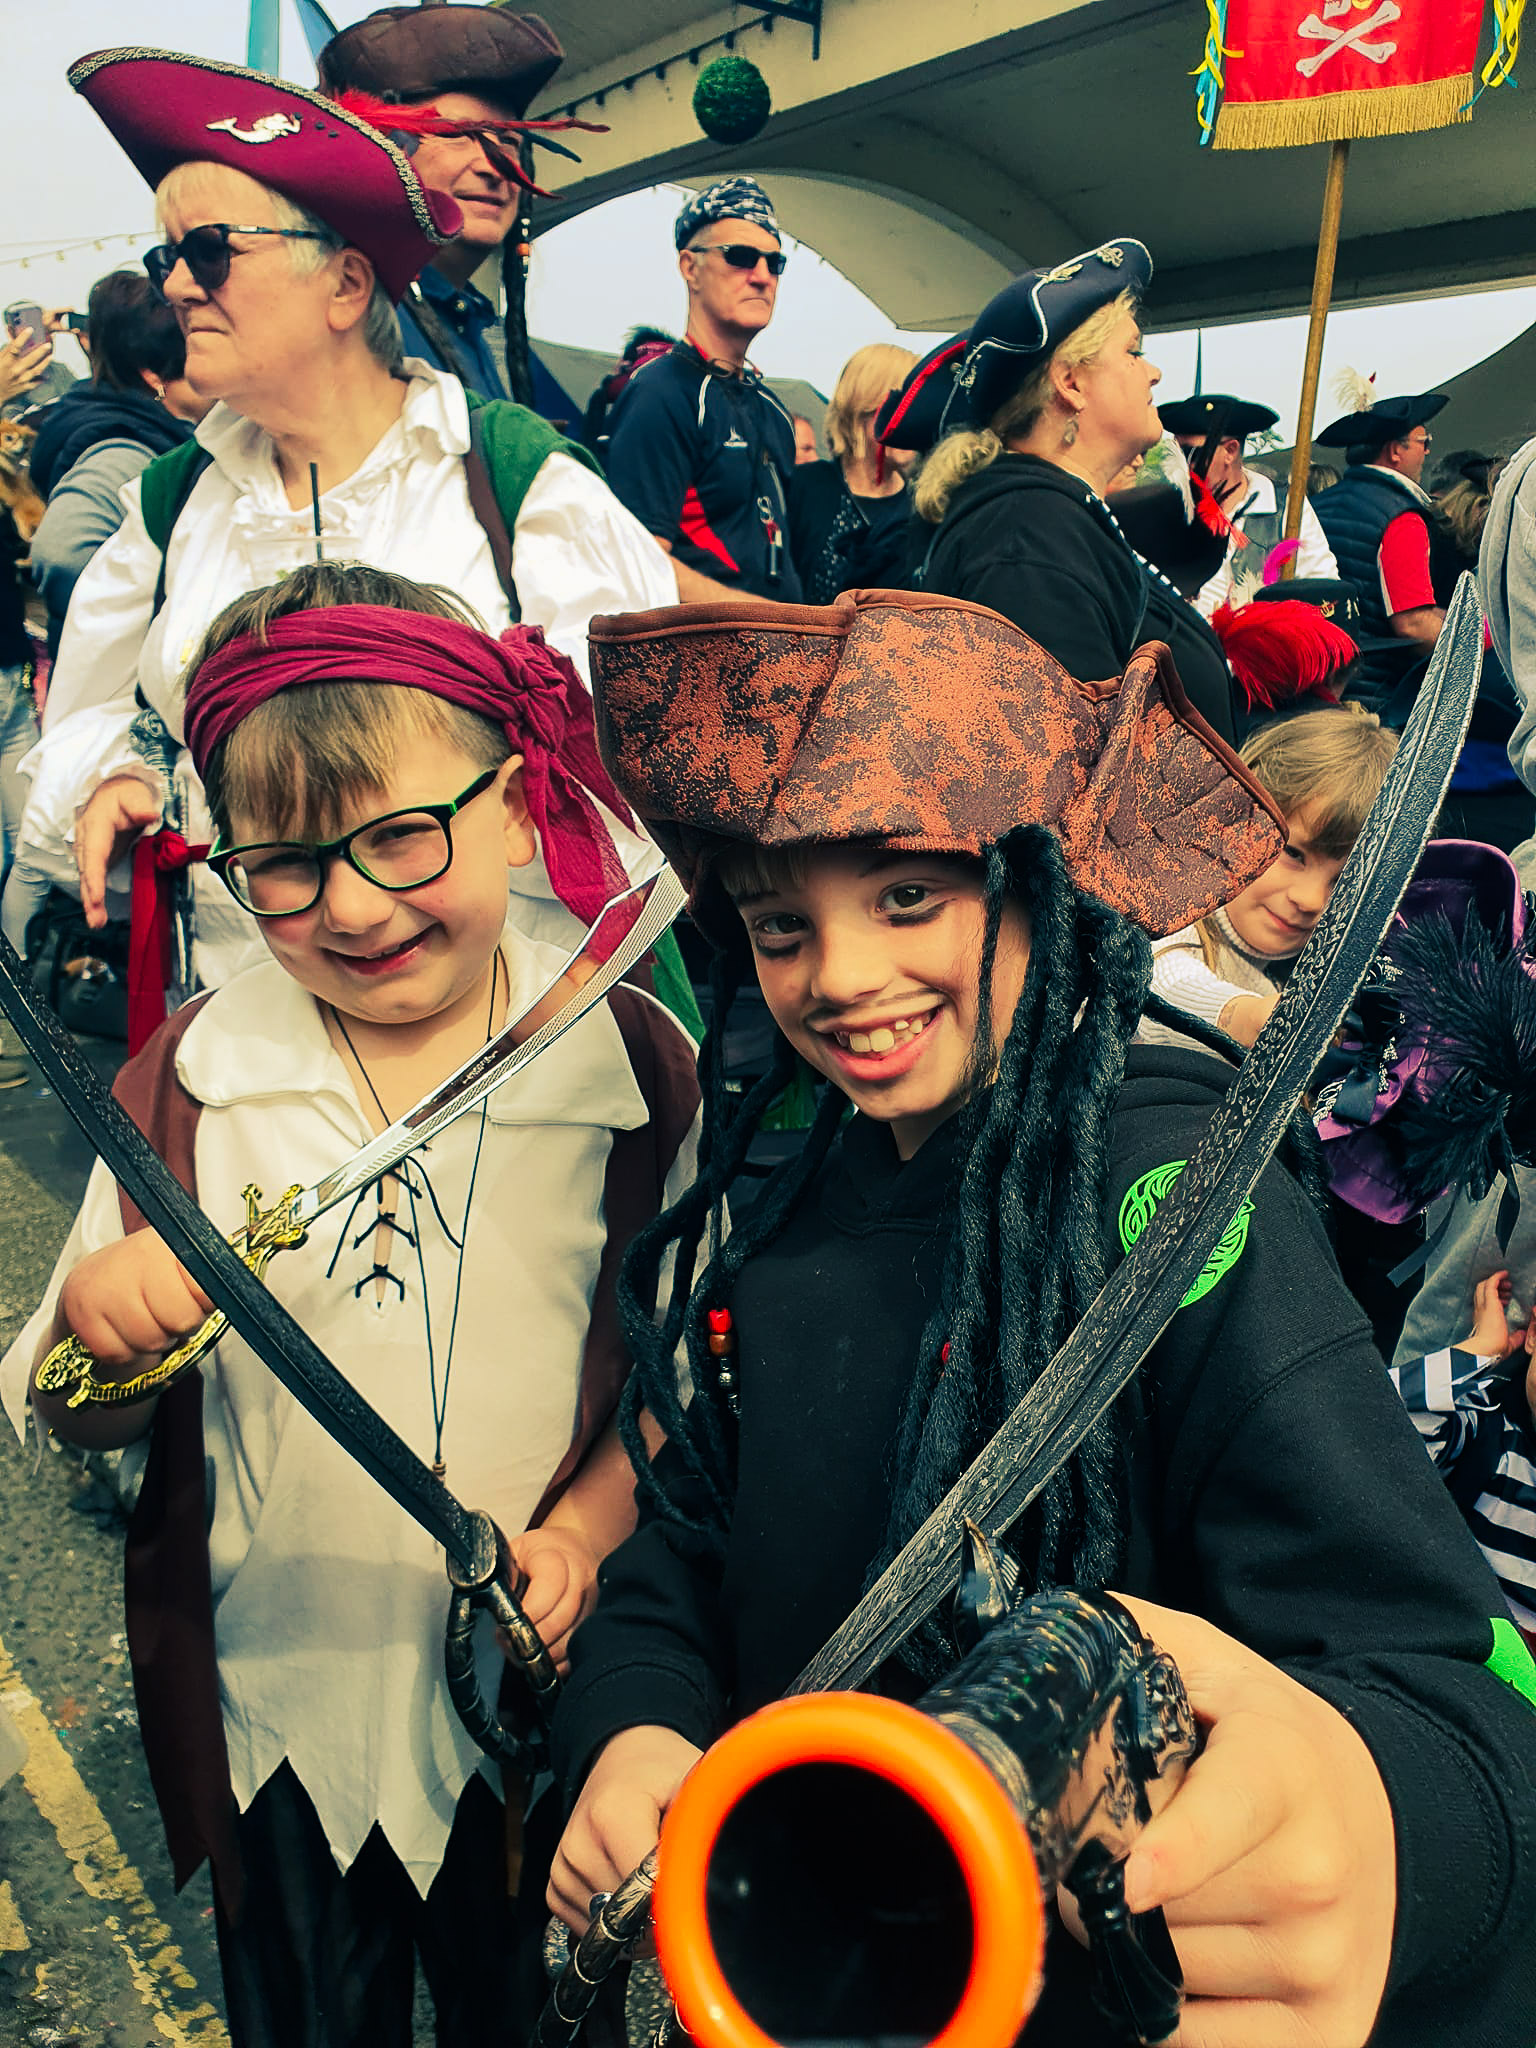 Kids at the Brixham Pirate Festival